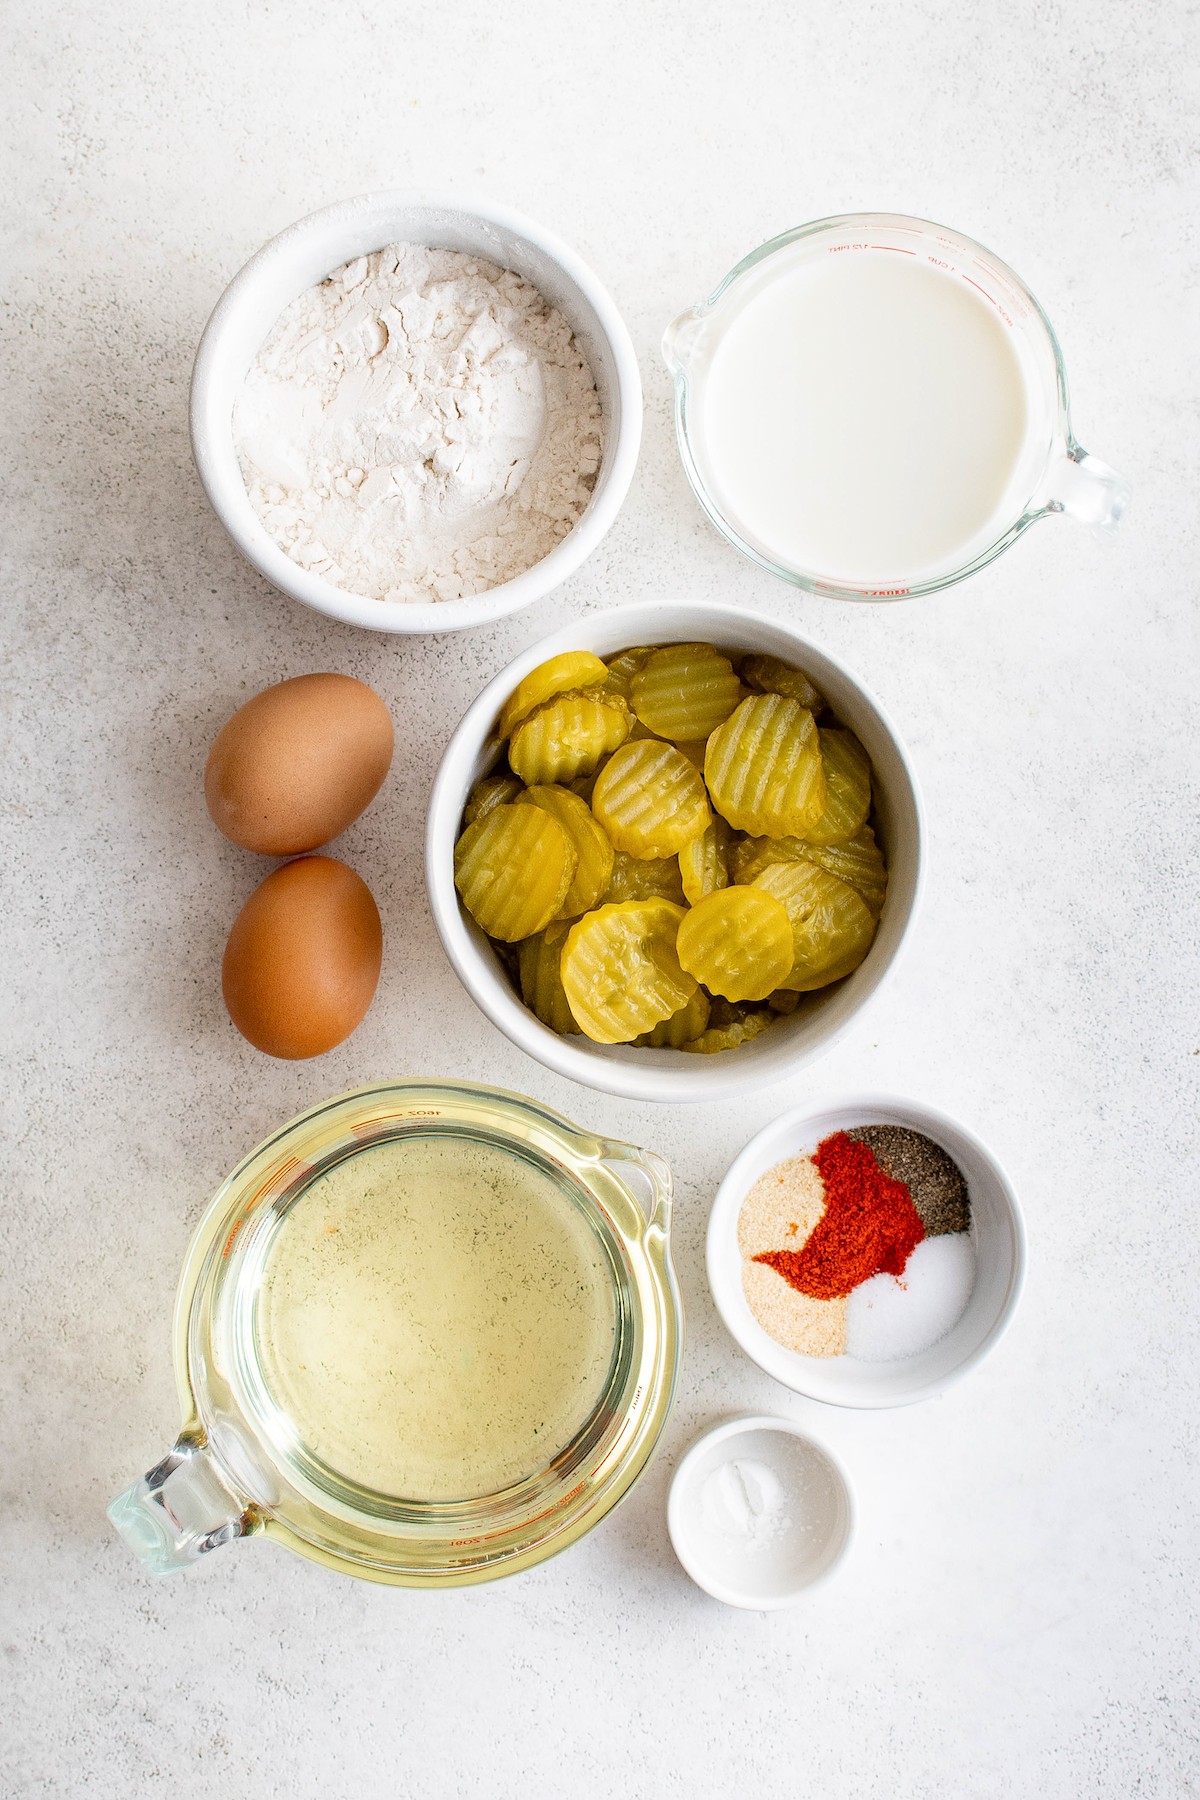 From top: Flour, milk, eggs, dill pickle chips, oil, seasonings, baking powder.